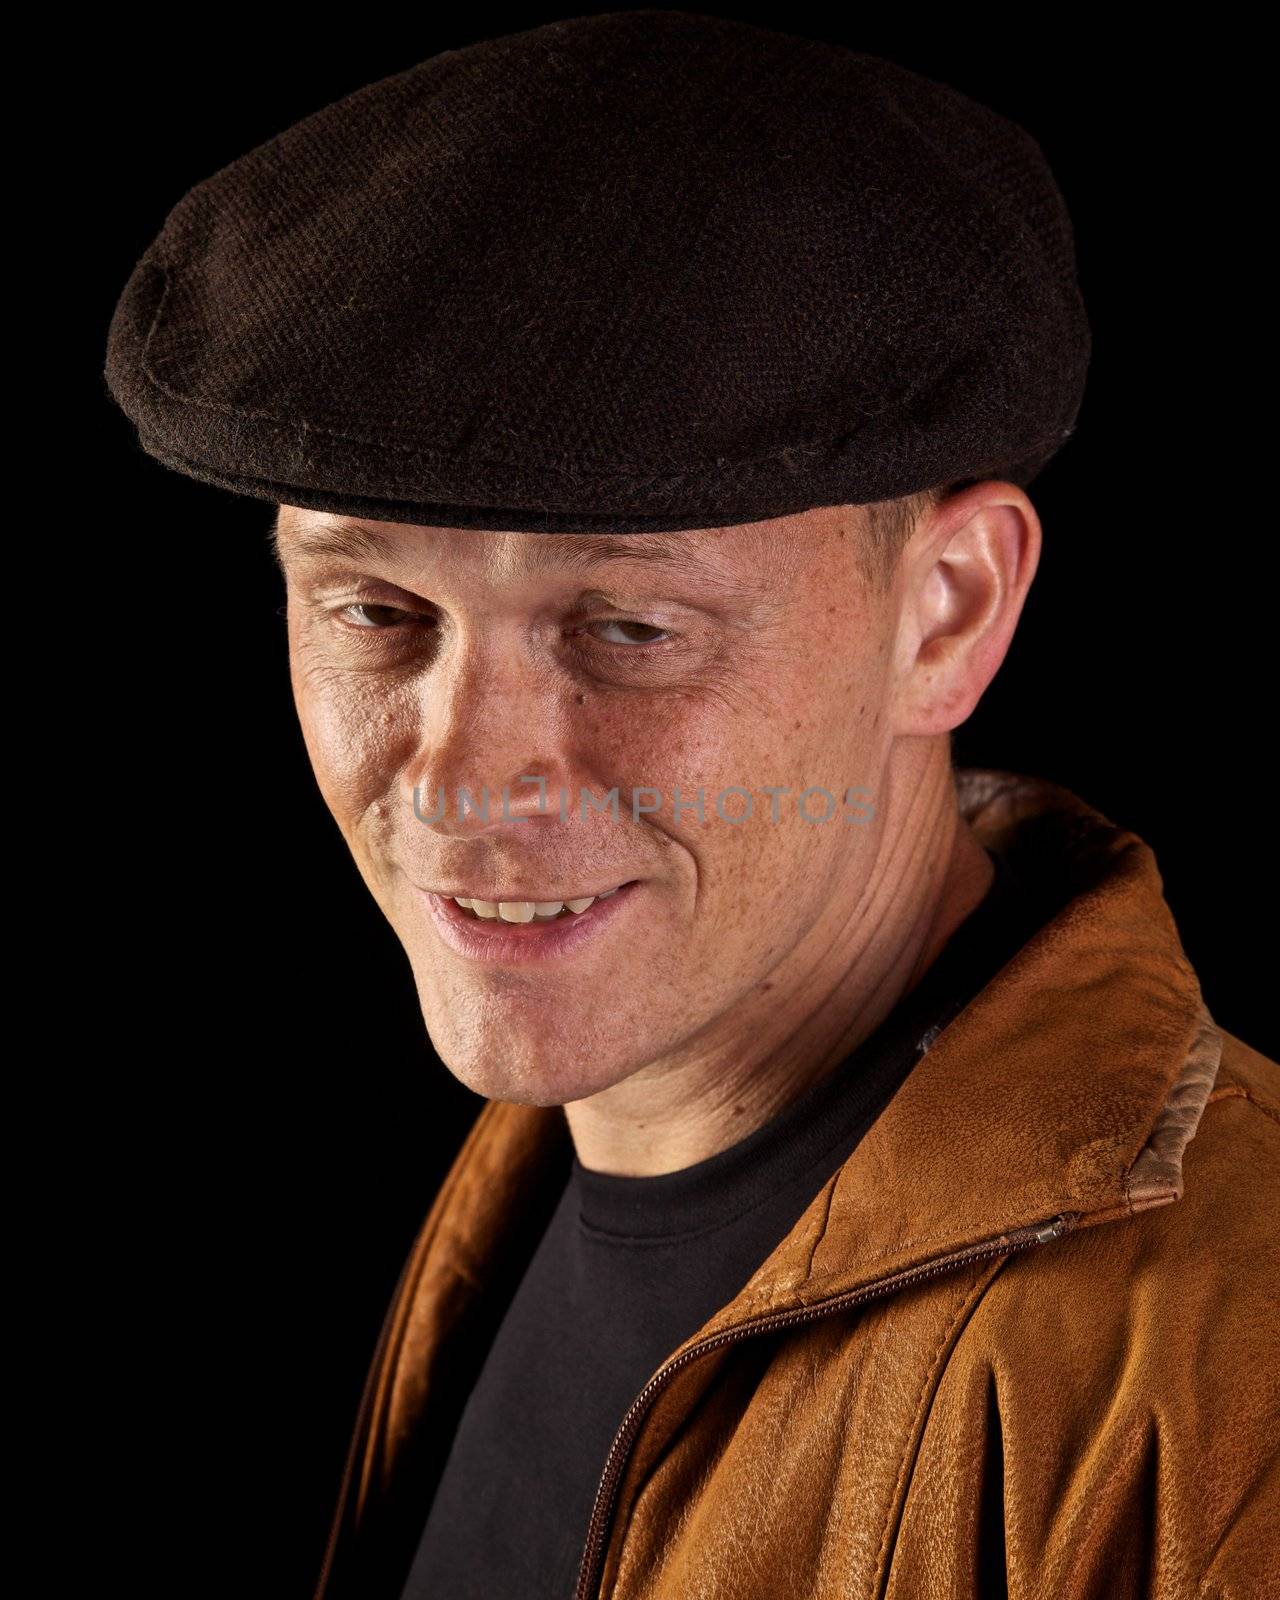 Portrait of impaired smiling man